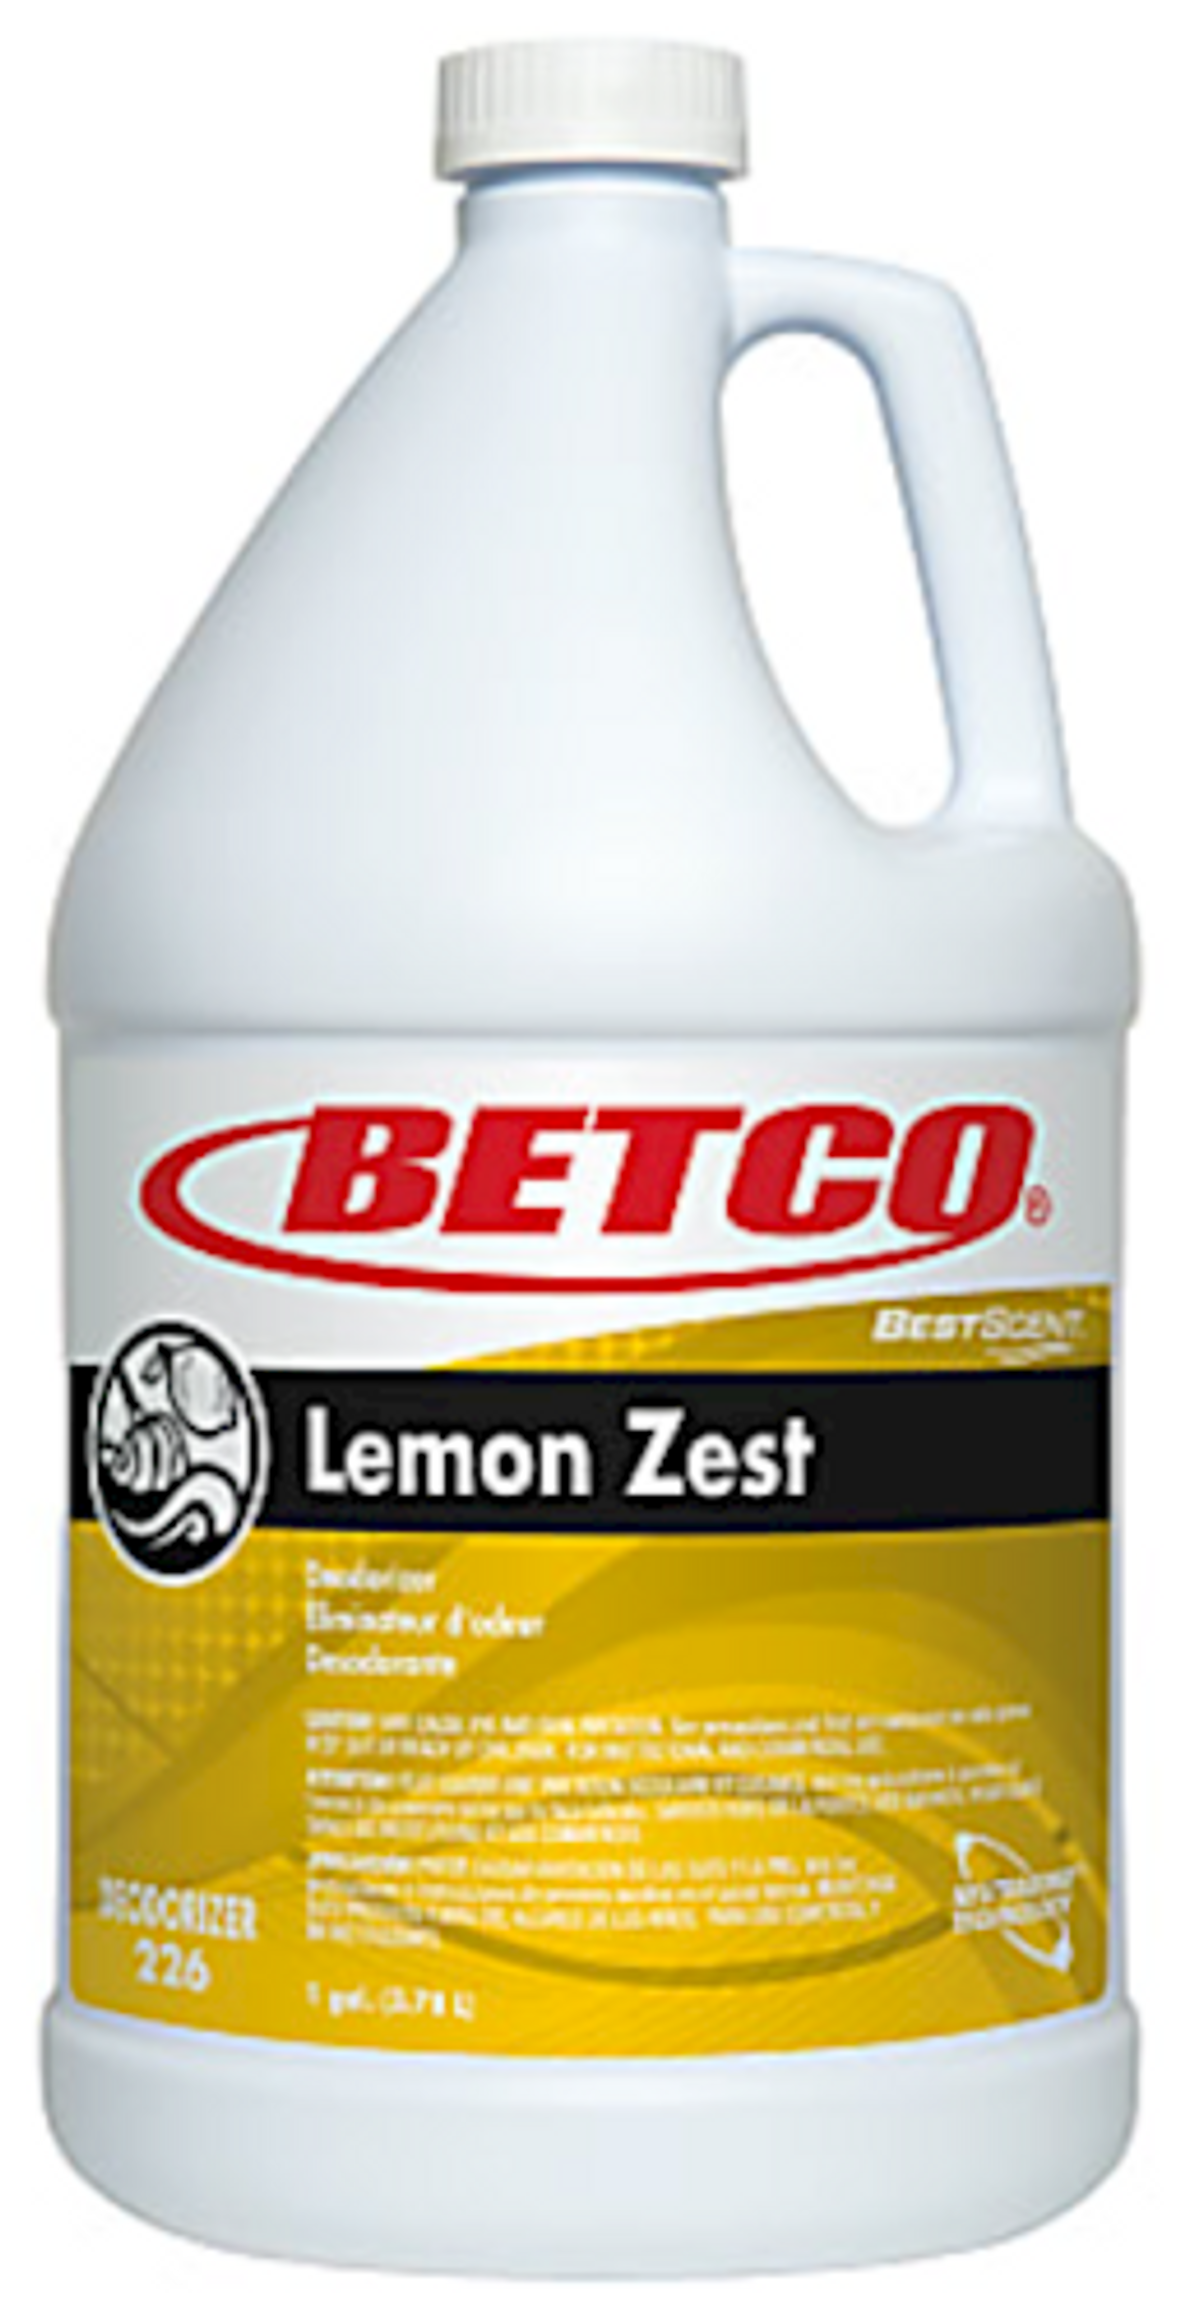 Betco Best Scent Odor Eliminator Concentrate, Lemon Zest Scent, 128 Oz,  4 Per Case